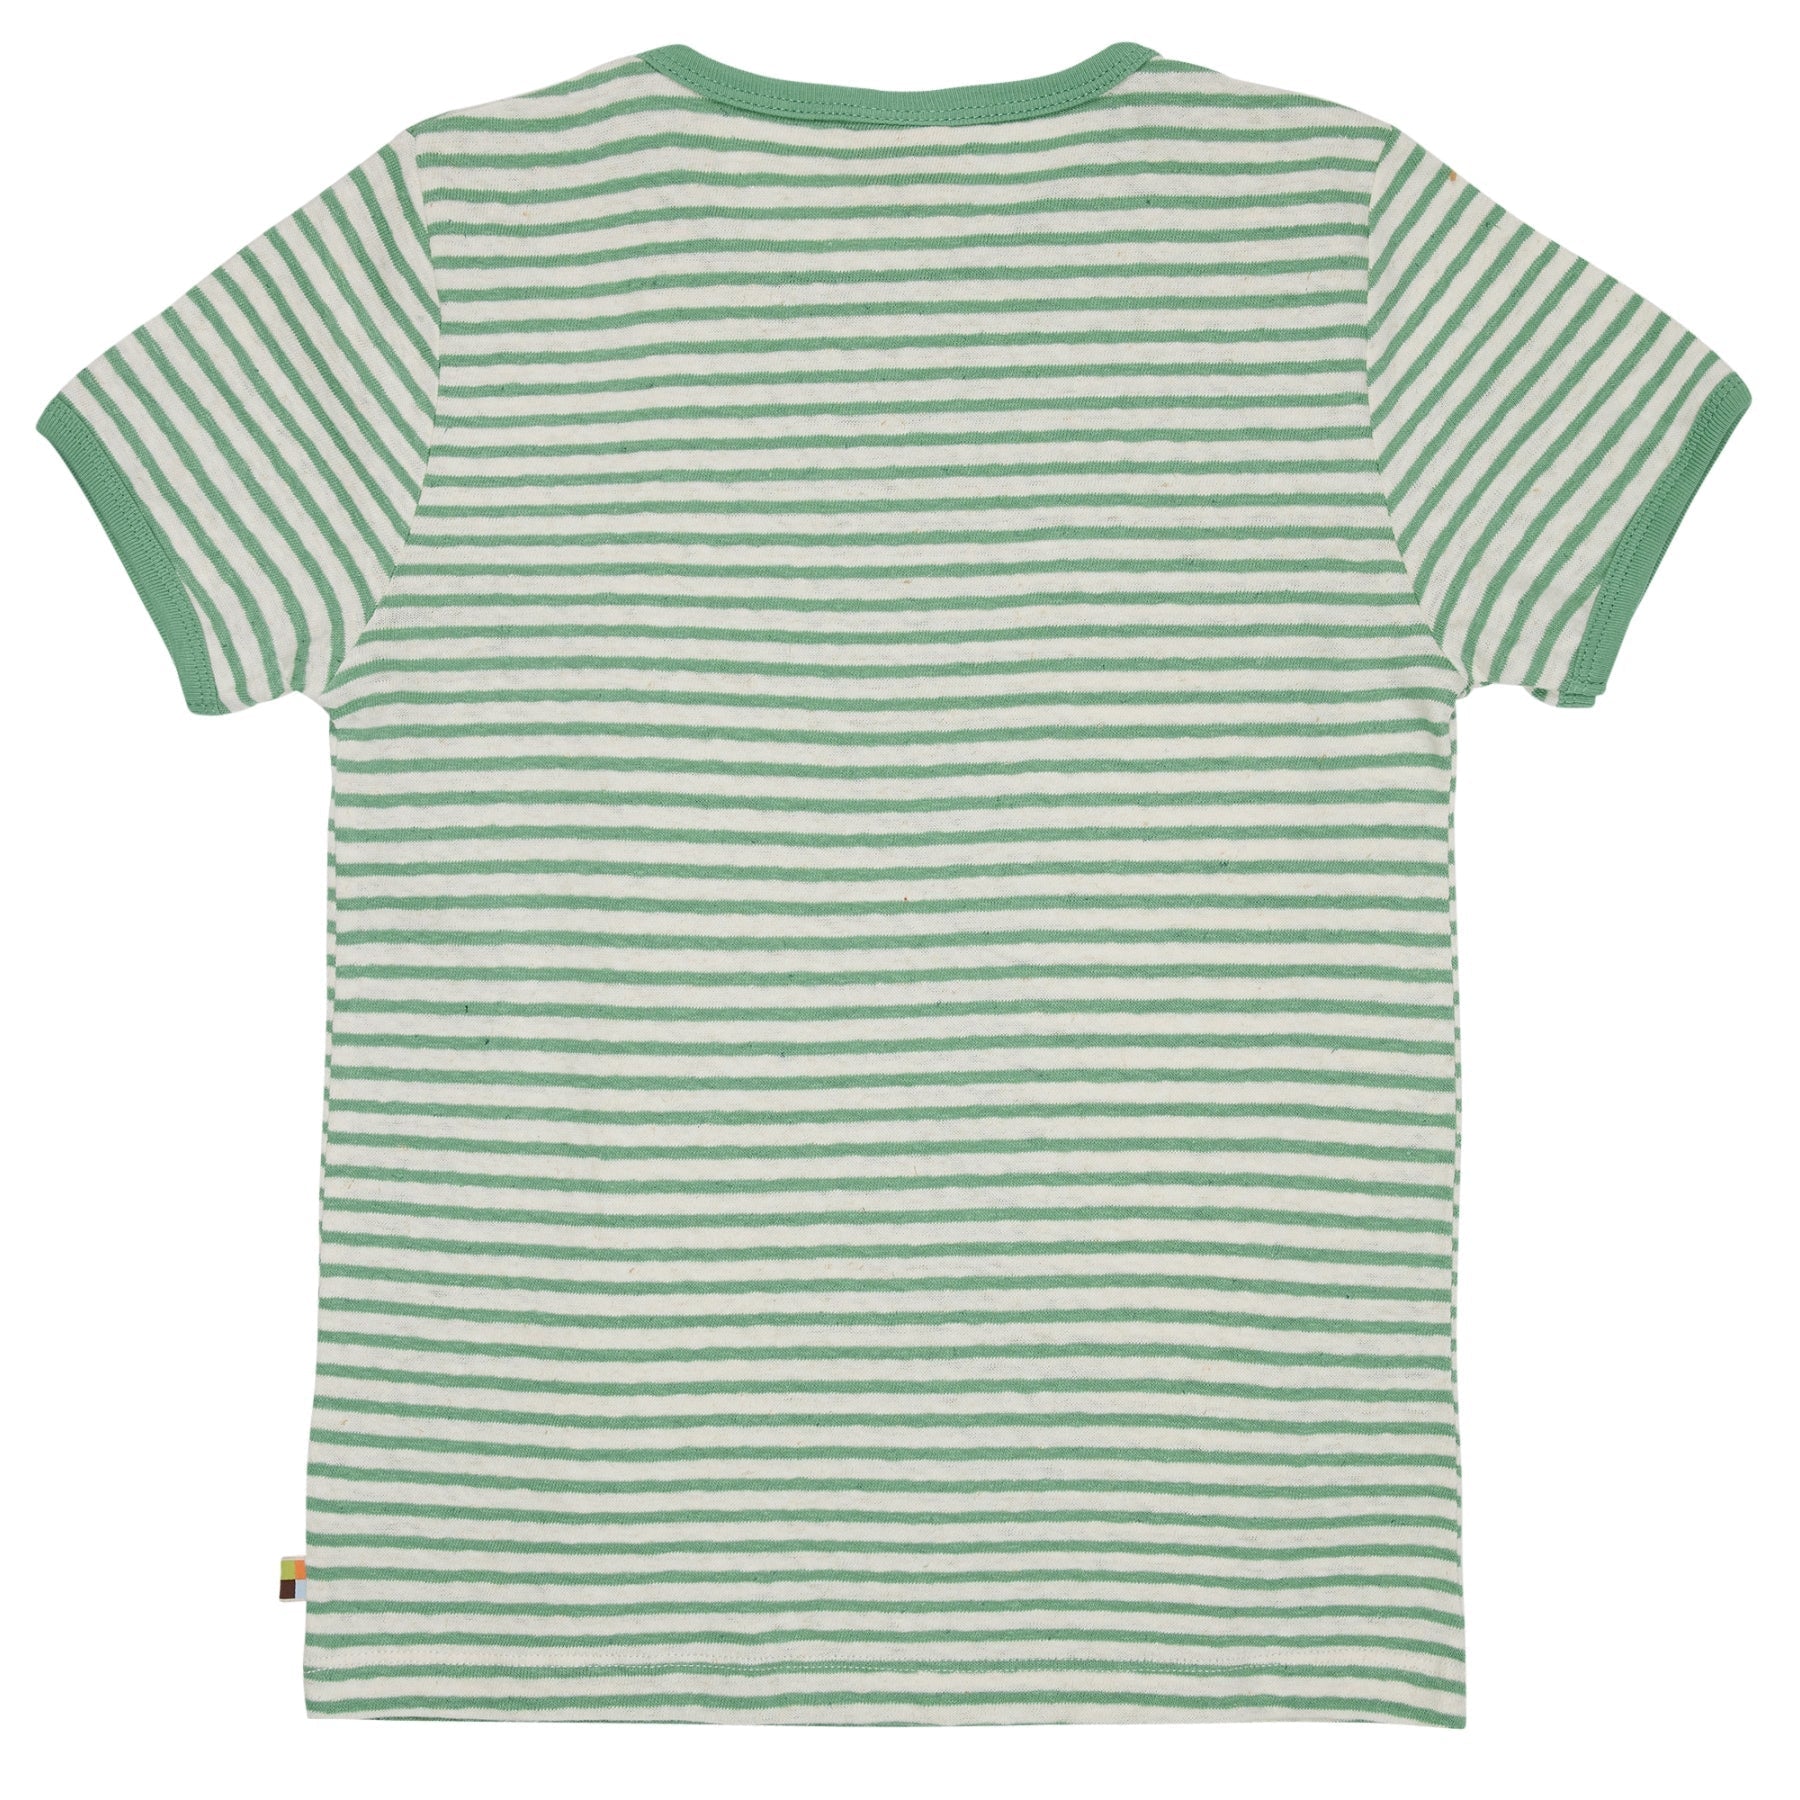 Loud + Proud - Bamboo Cotton/Linen Striped Short Sleeved Top